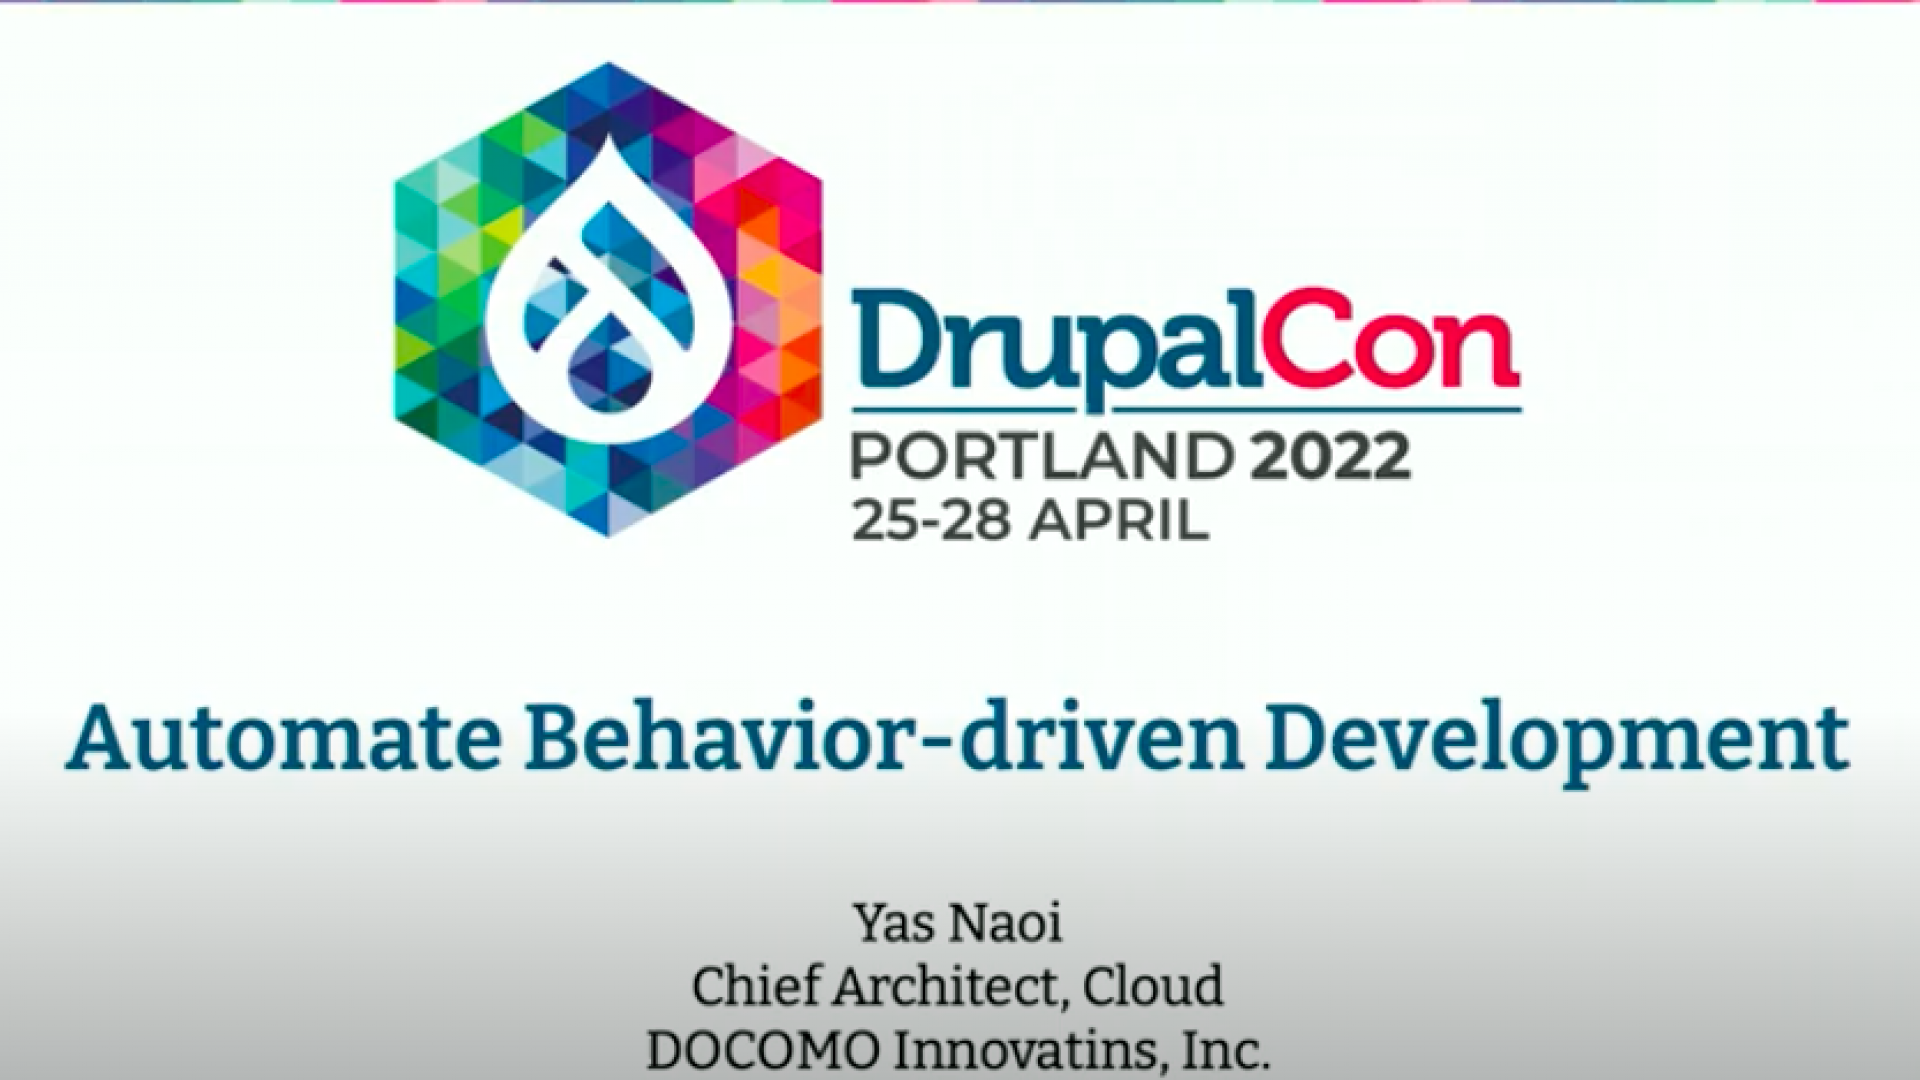 DrupalCon - Automate Behavior-driven Development